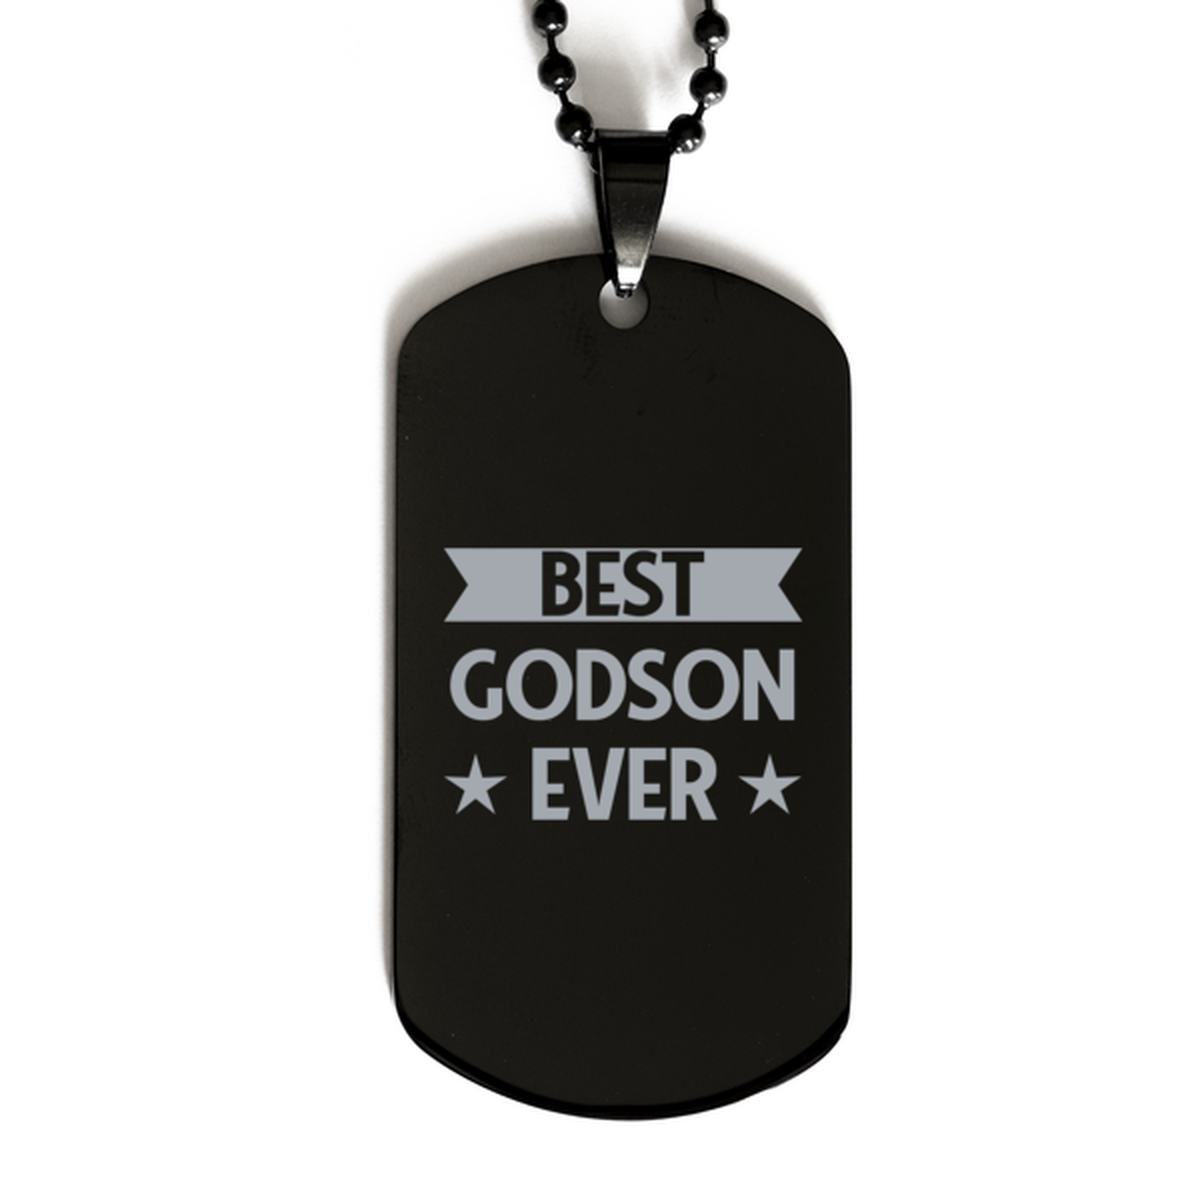 Best Godson Ever Godson Gifts, Funny Black Dog Tag For Godson, Birthday Family Presents Engraved Necklace For Men